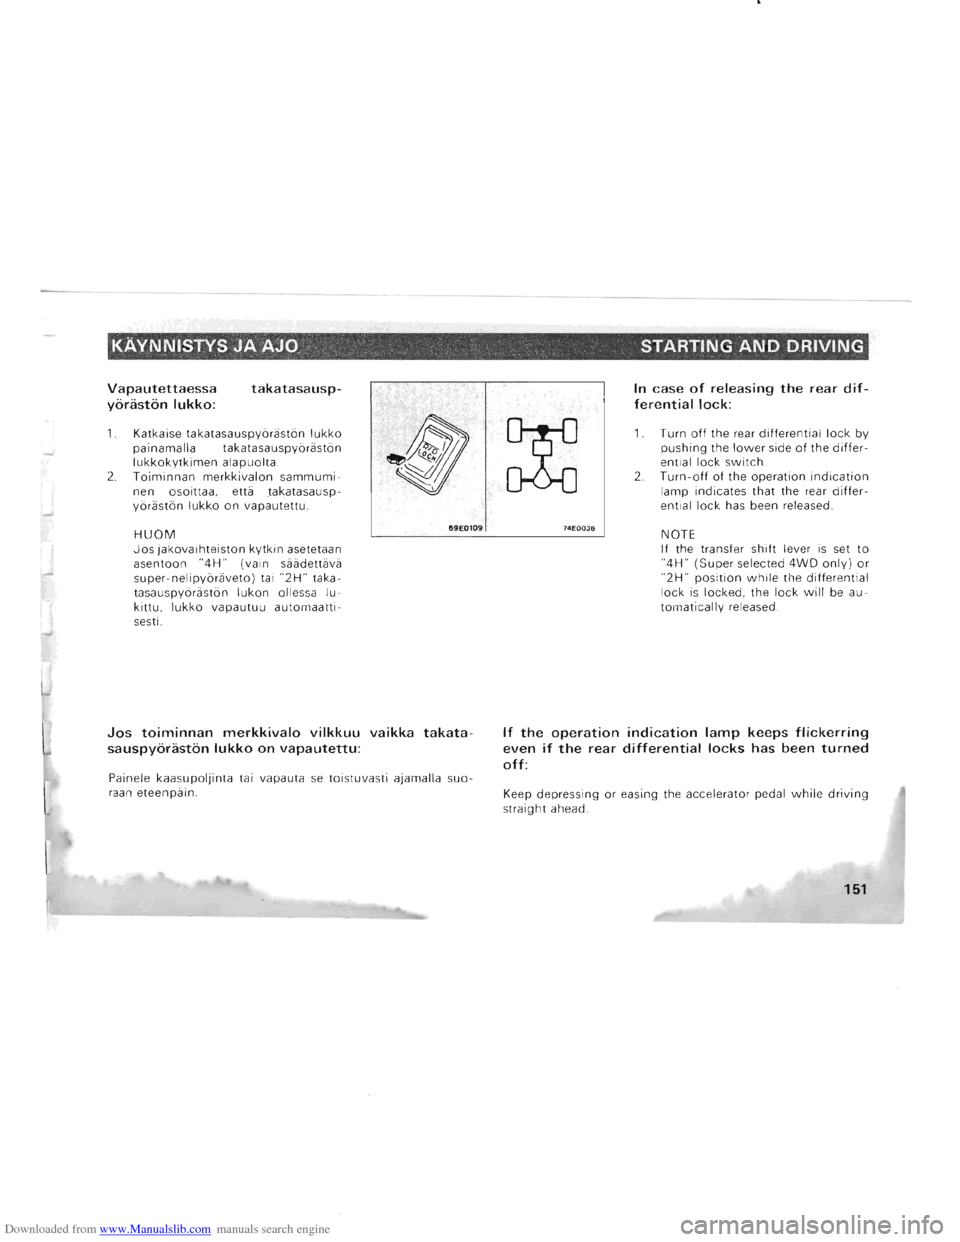 MITSUBISHI PAJERO 1996 2.G Owners Manual Downloaded from www.Manualslib.com manuals search engine KAYNNISTYS JA Ale. STARTING AND DRIVING 
Vapautettaessa 
yoraston lukko: 
takatasausp-
1. Katkaise takatasauspyoraston lukko painamalla  takata